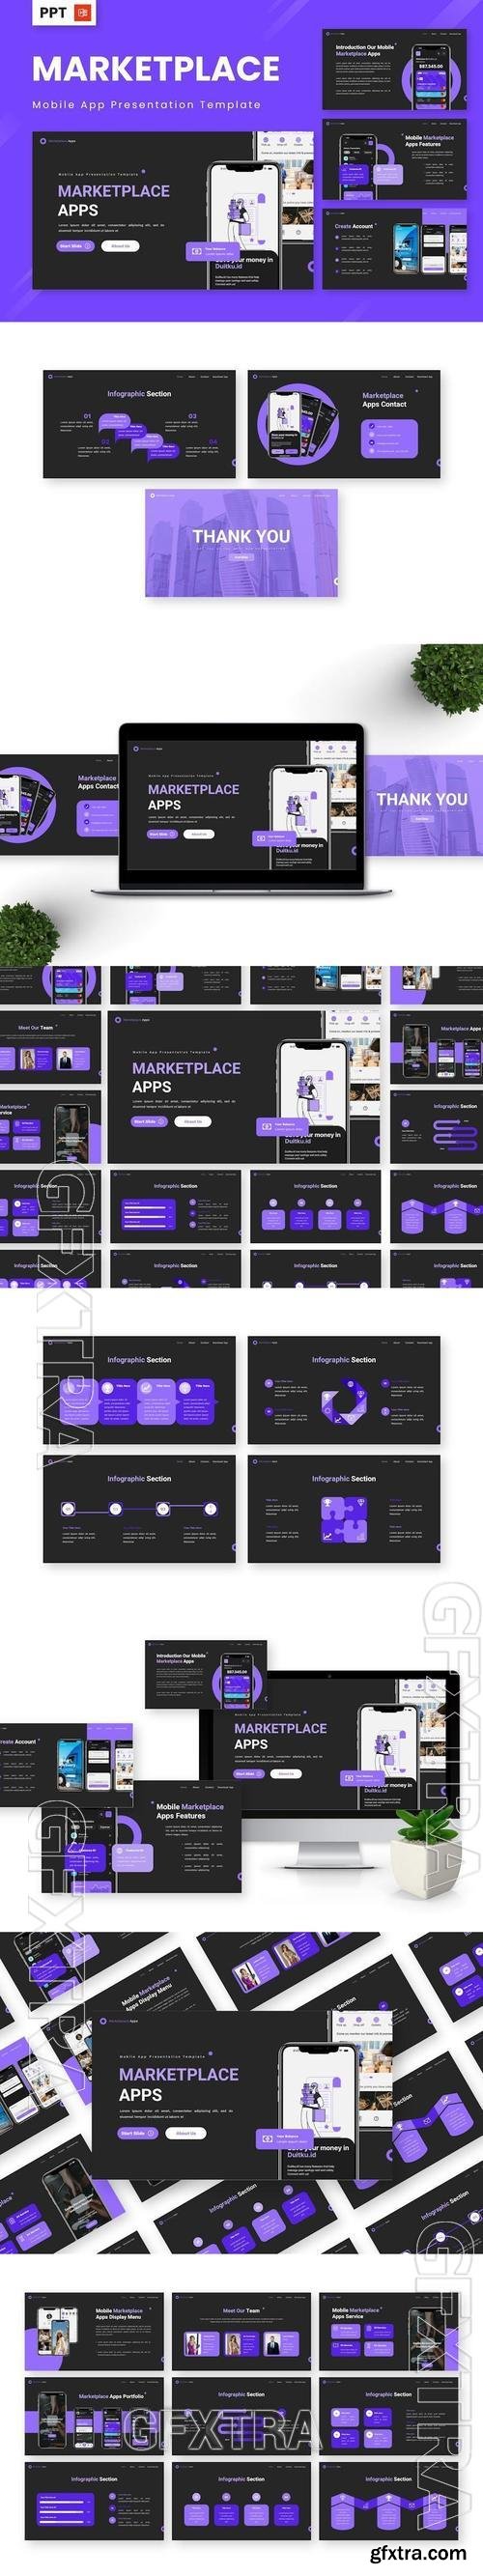 Marketplace Apps - Mobile App Powerpoint Templates XP4HQ7E